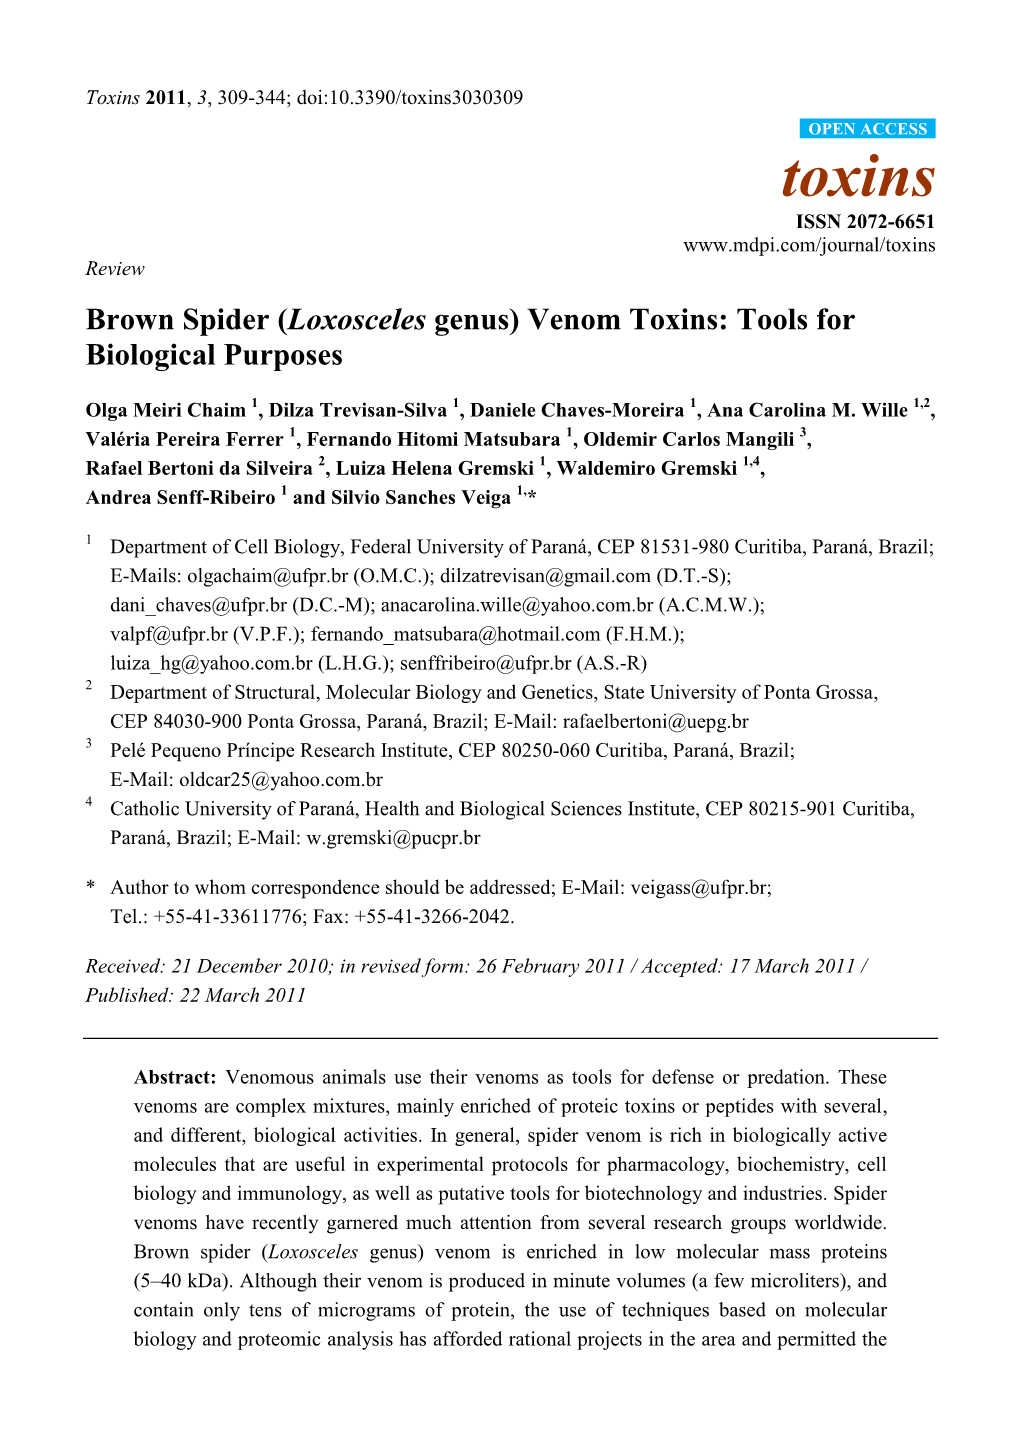 Brown Spider (Loxosceles Genus) Venom Toxins: Tools for Biological Purposes